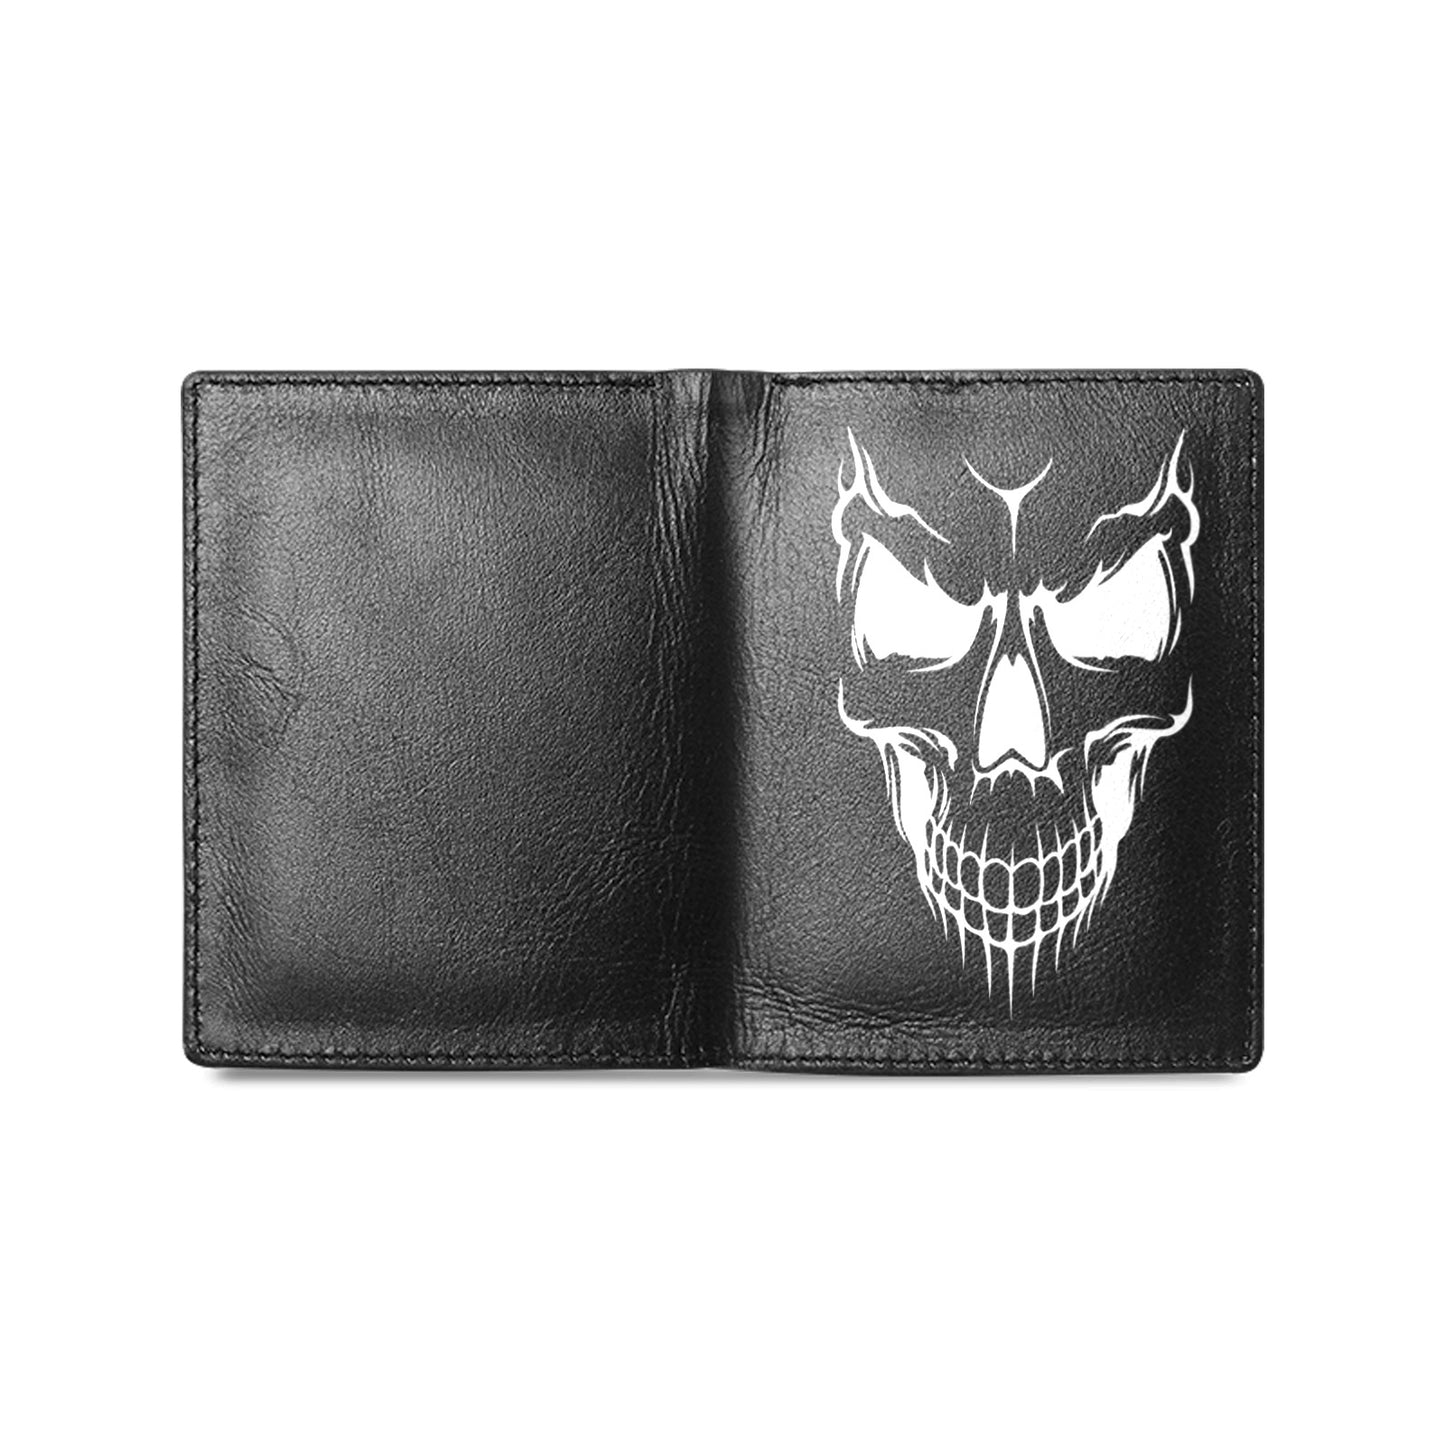 Smiling Skull Face Leather Wallet